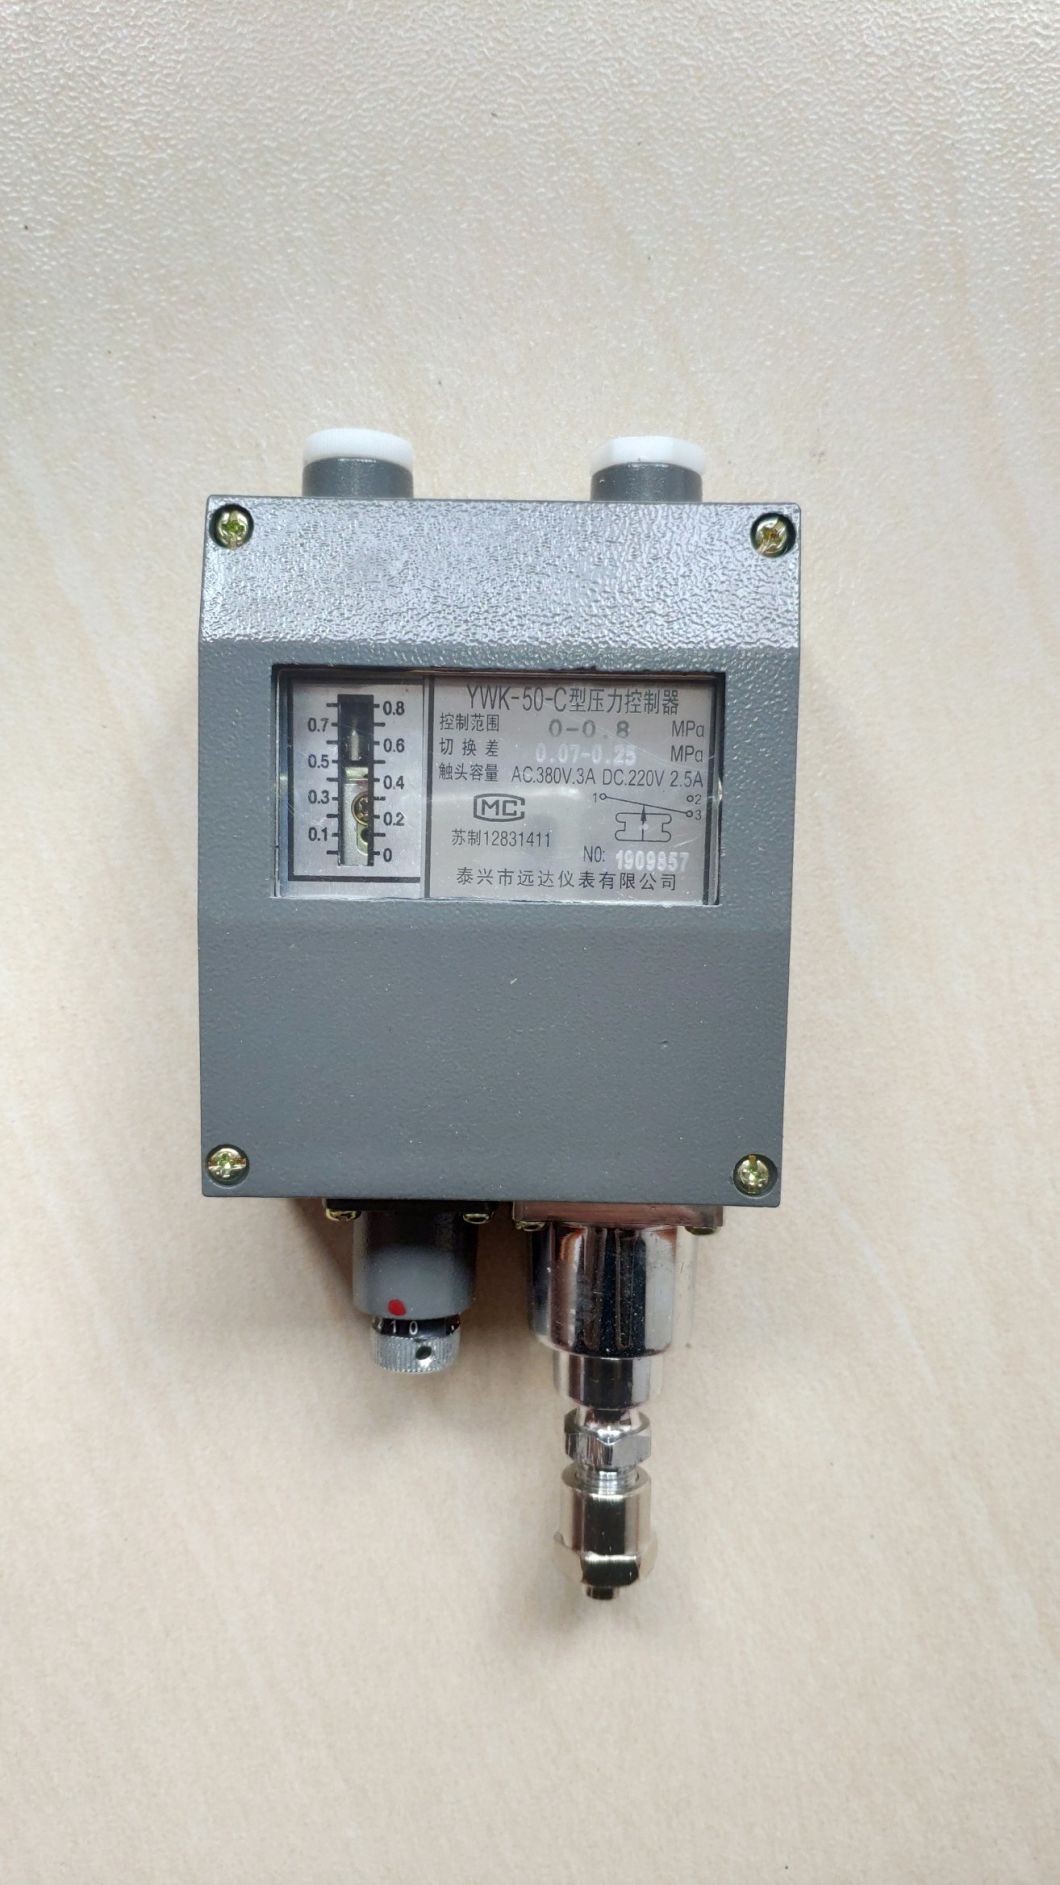 Made in China Ywk 50 C Marine Pressure Switch Controller